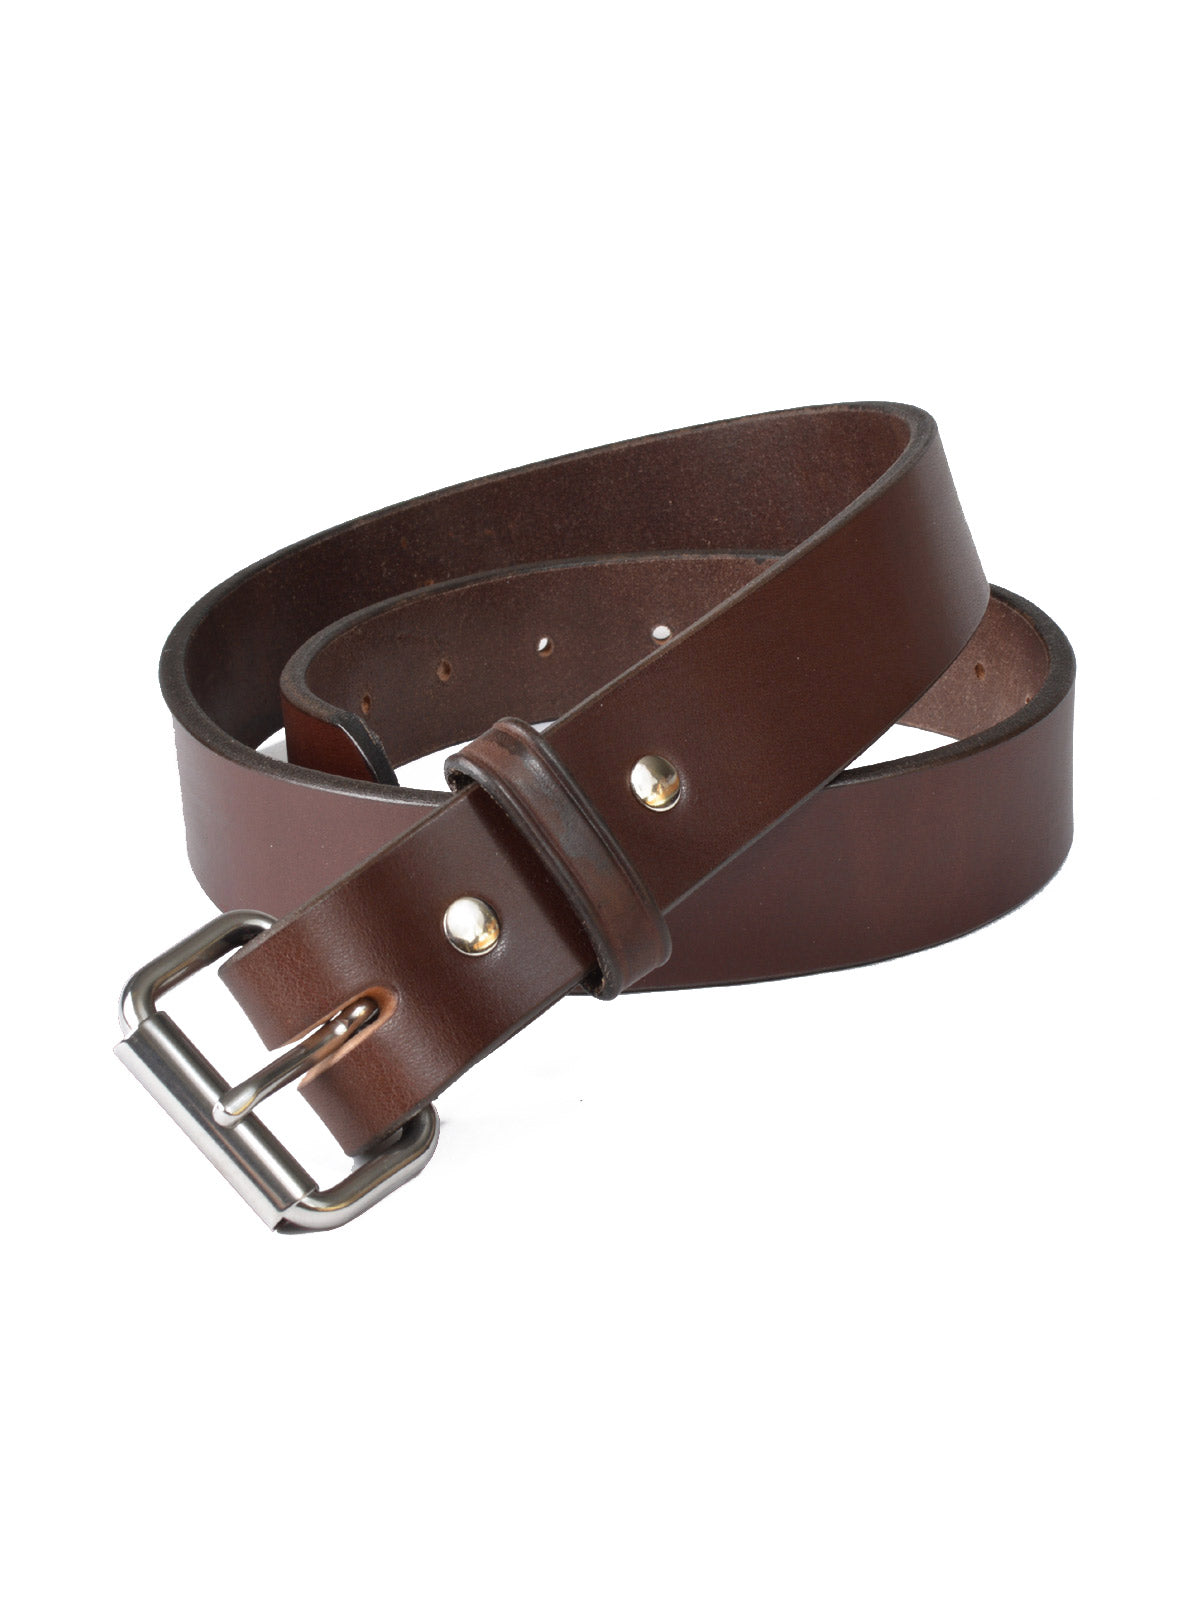 P&B Harness Full Grain Leather Belts in Brown 310-R-BRN - Regular Sizes